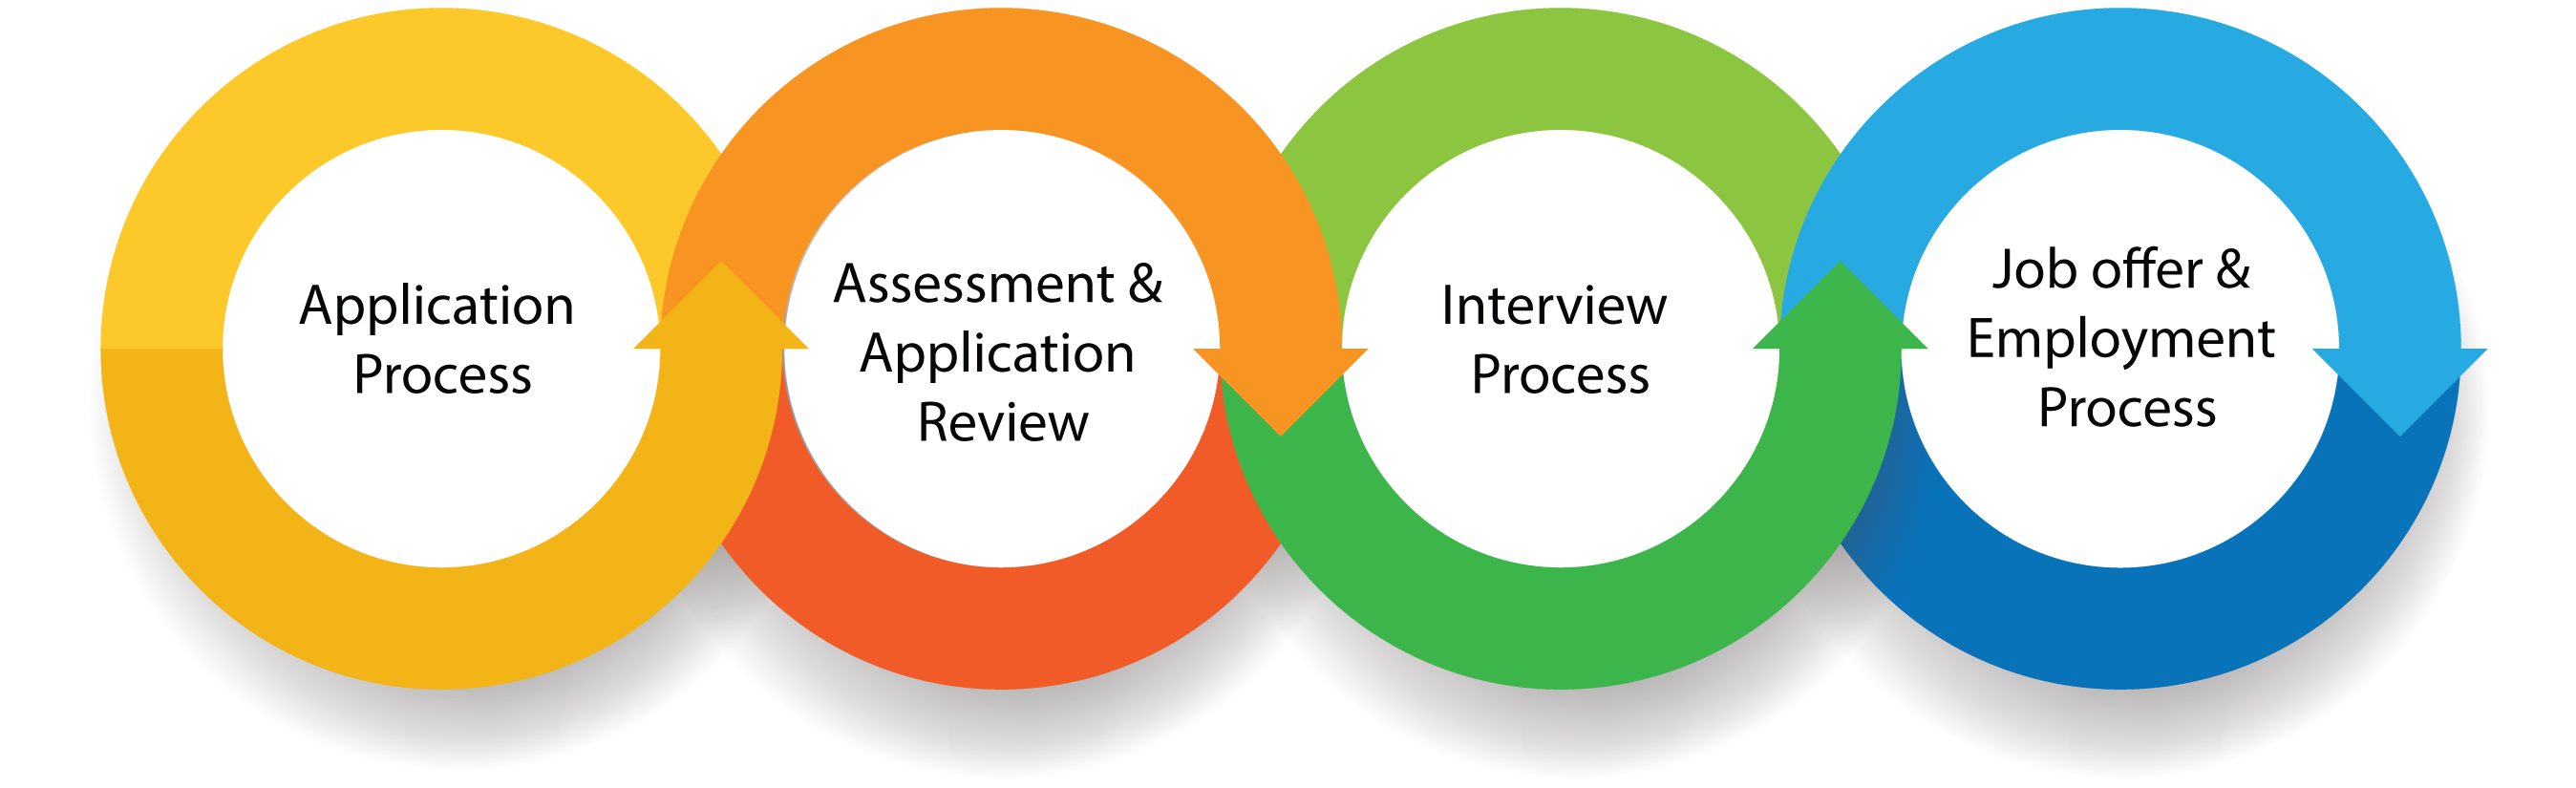 Rpo collection. Application process. Hiring process. Процесс рекрутмента. Job process.